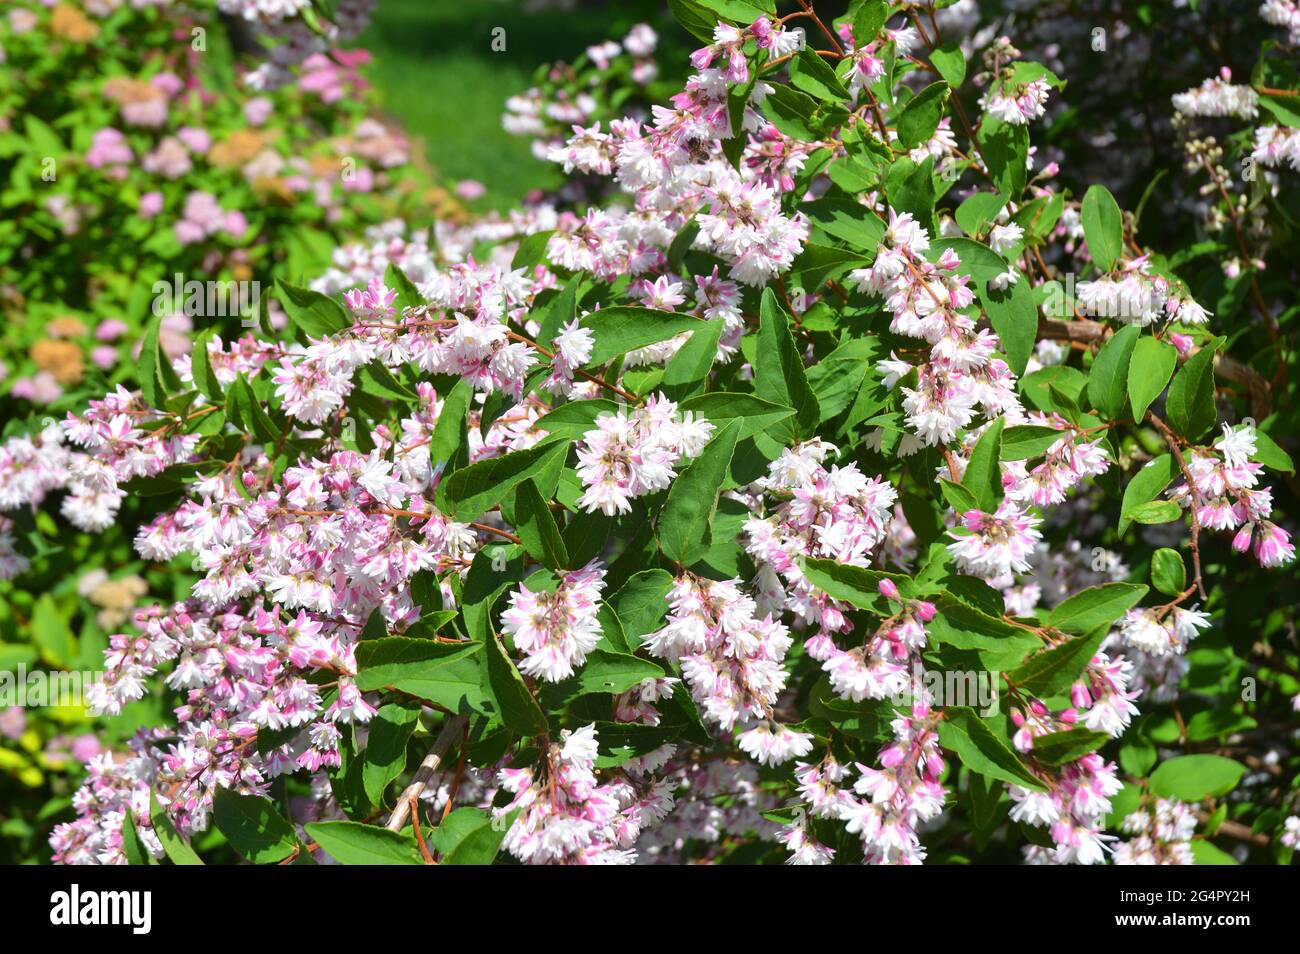 Deutzia bush branches bloom. Blossoming deutzia, or star-shaped flowering bush in the garden. Stock Photo